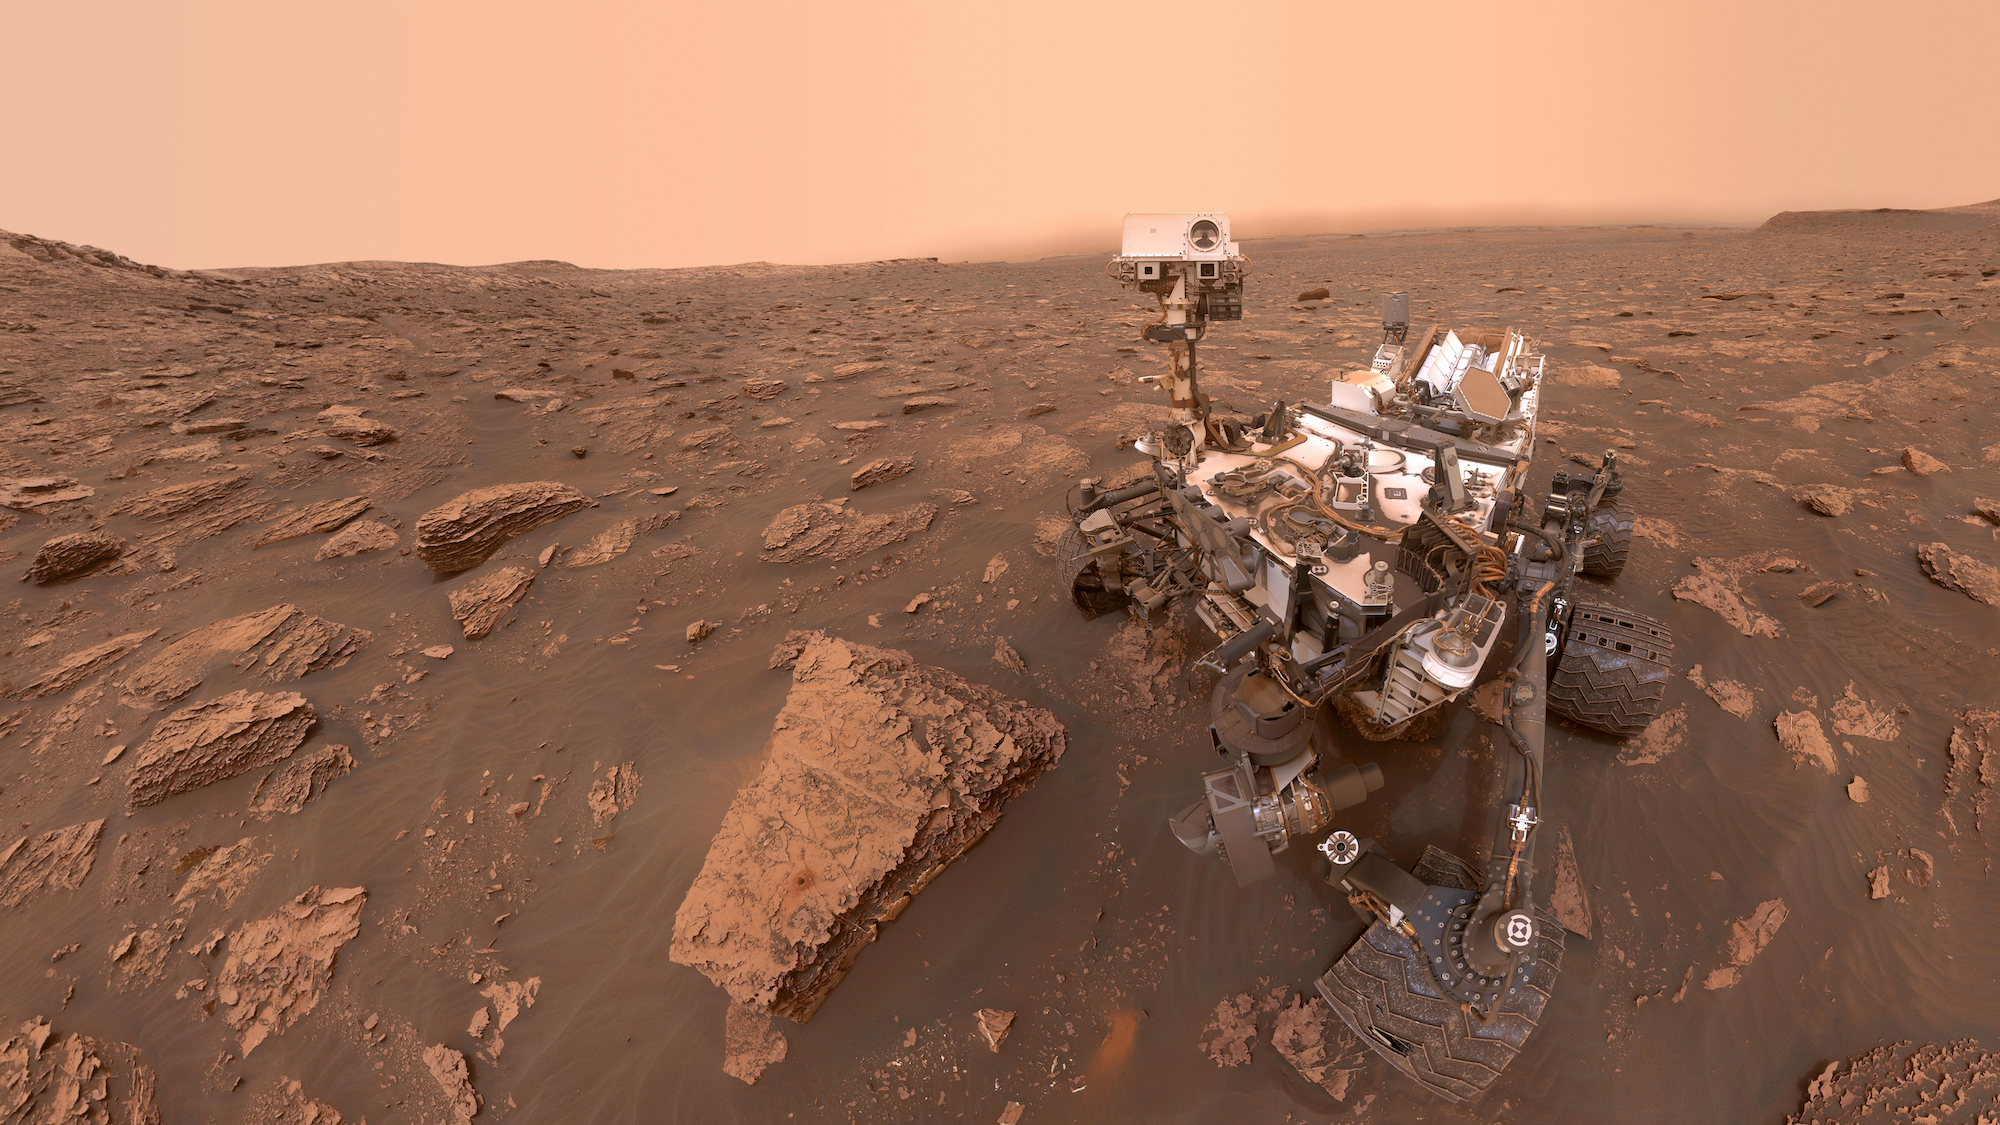 Mars Curiosity Rover selfie photo on Martian surface